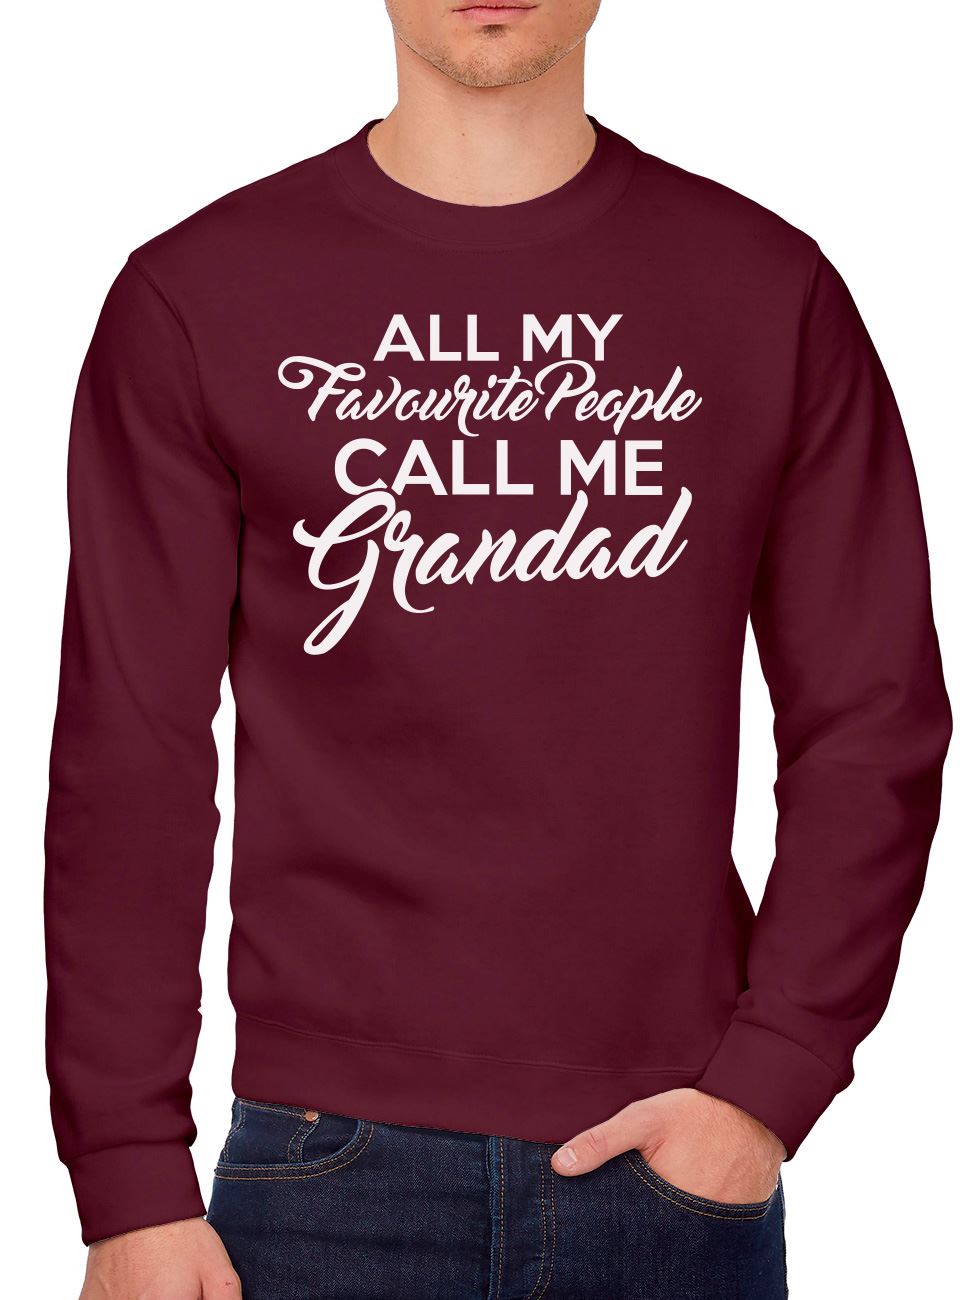 All My Favourite People Call Me Grandad - Youth & Mens Sweatshirt